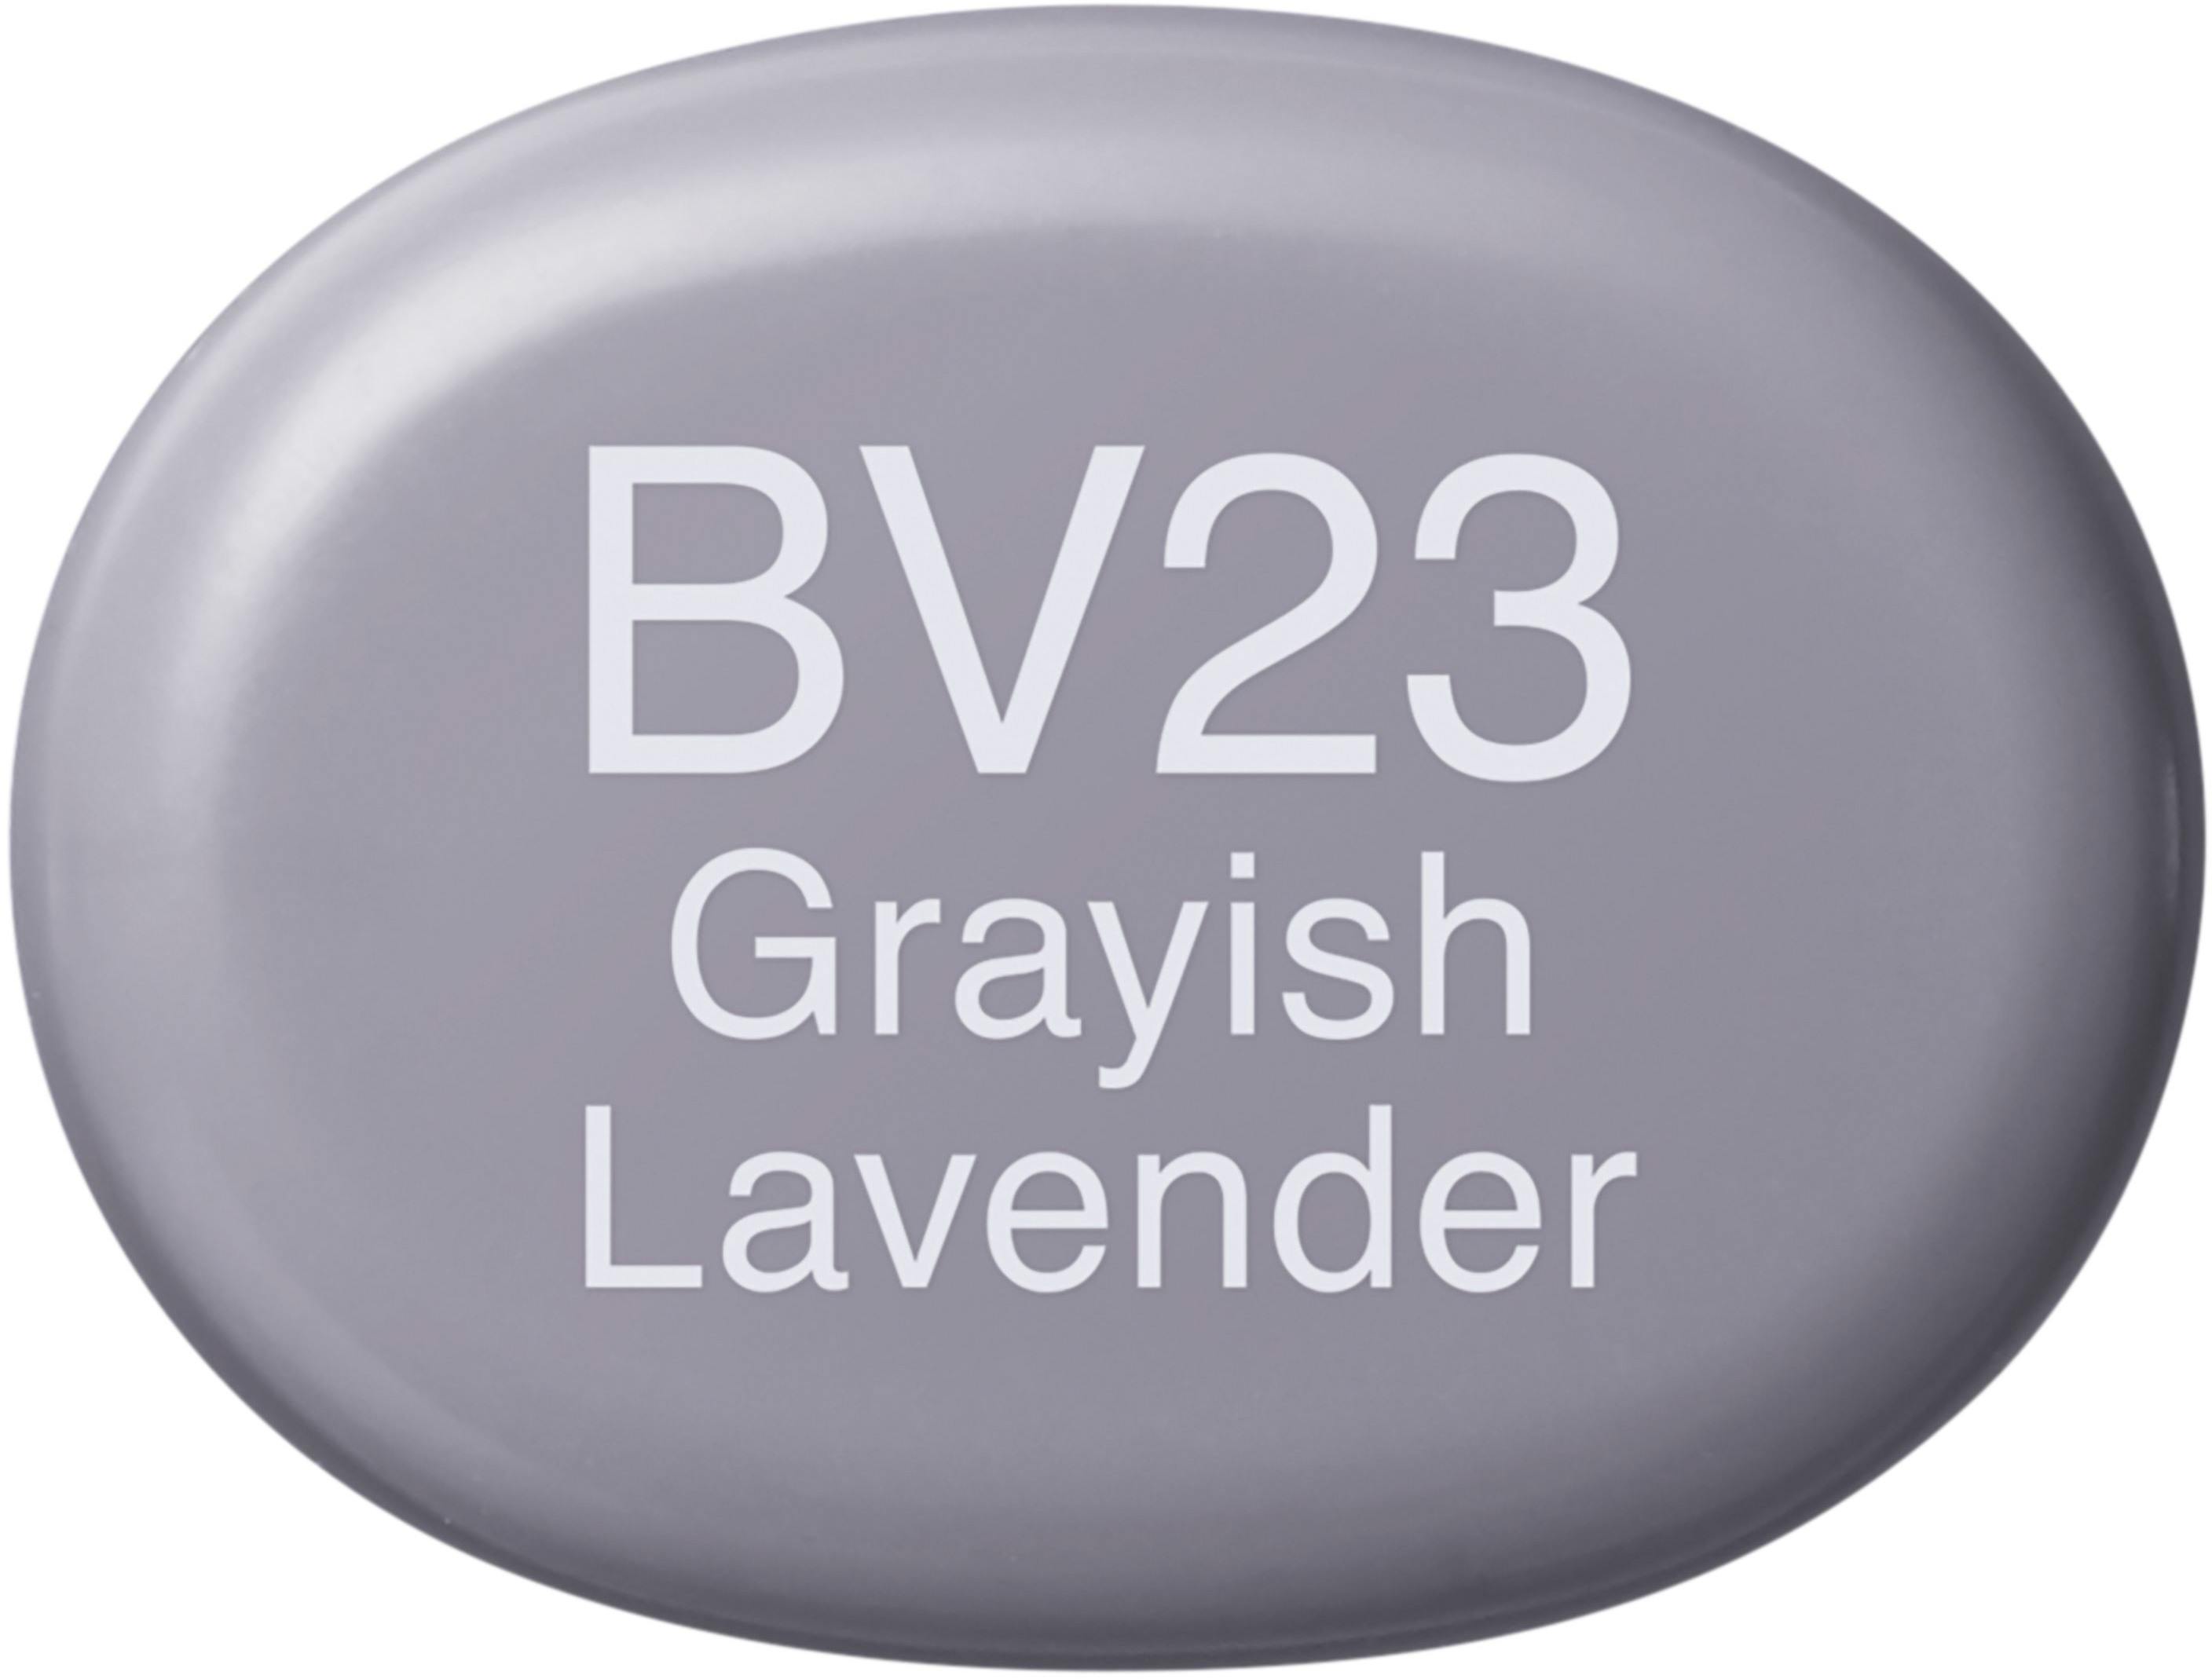 COPIC Marker Sketch 21075171 BV23 - Greyish Lavender